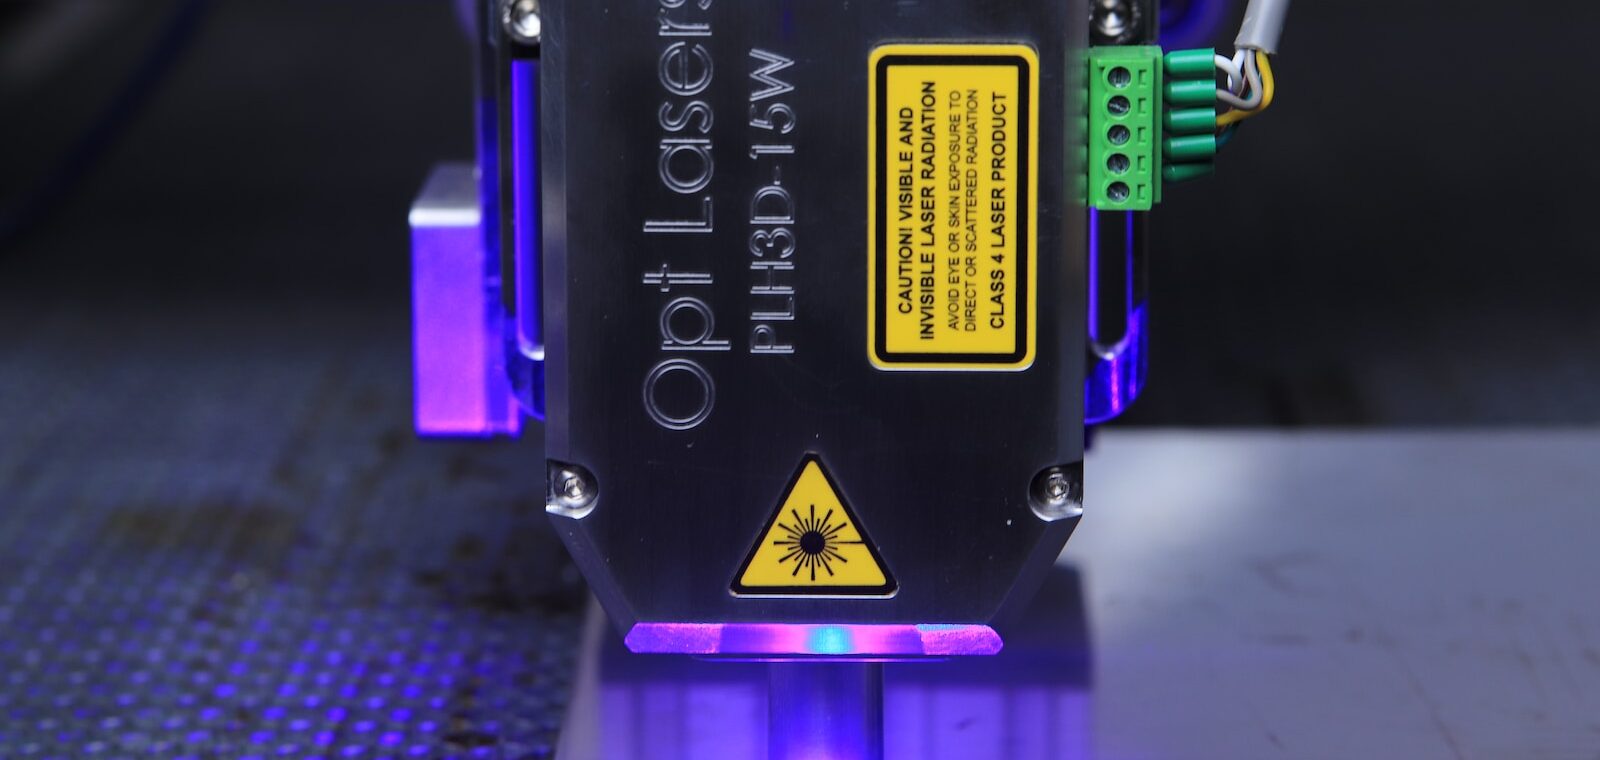 a close up of a machine with a purple light